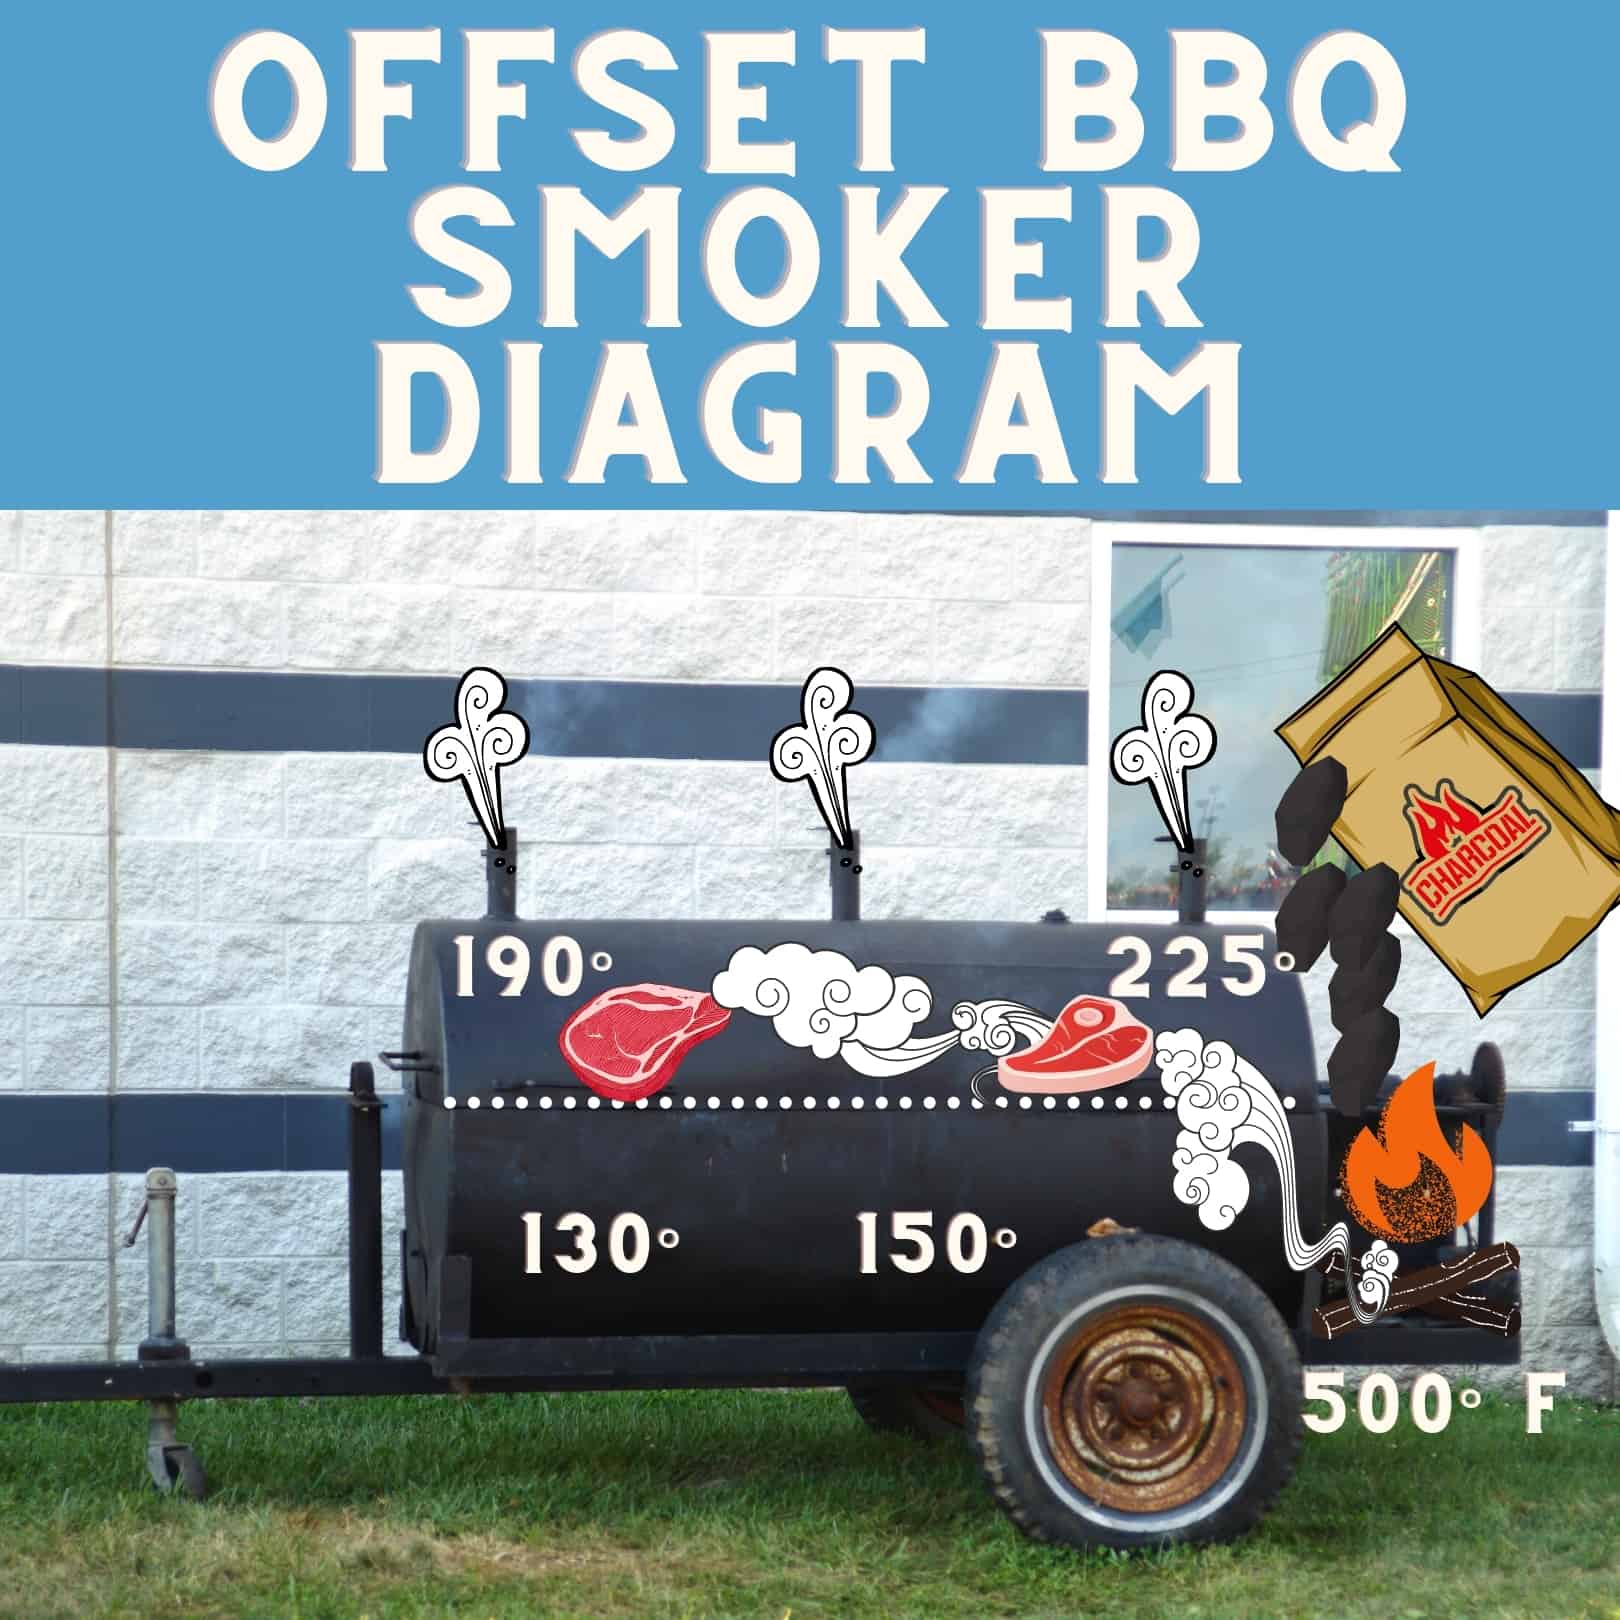 Offset BBQ smoker Diagram